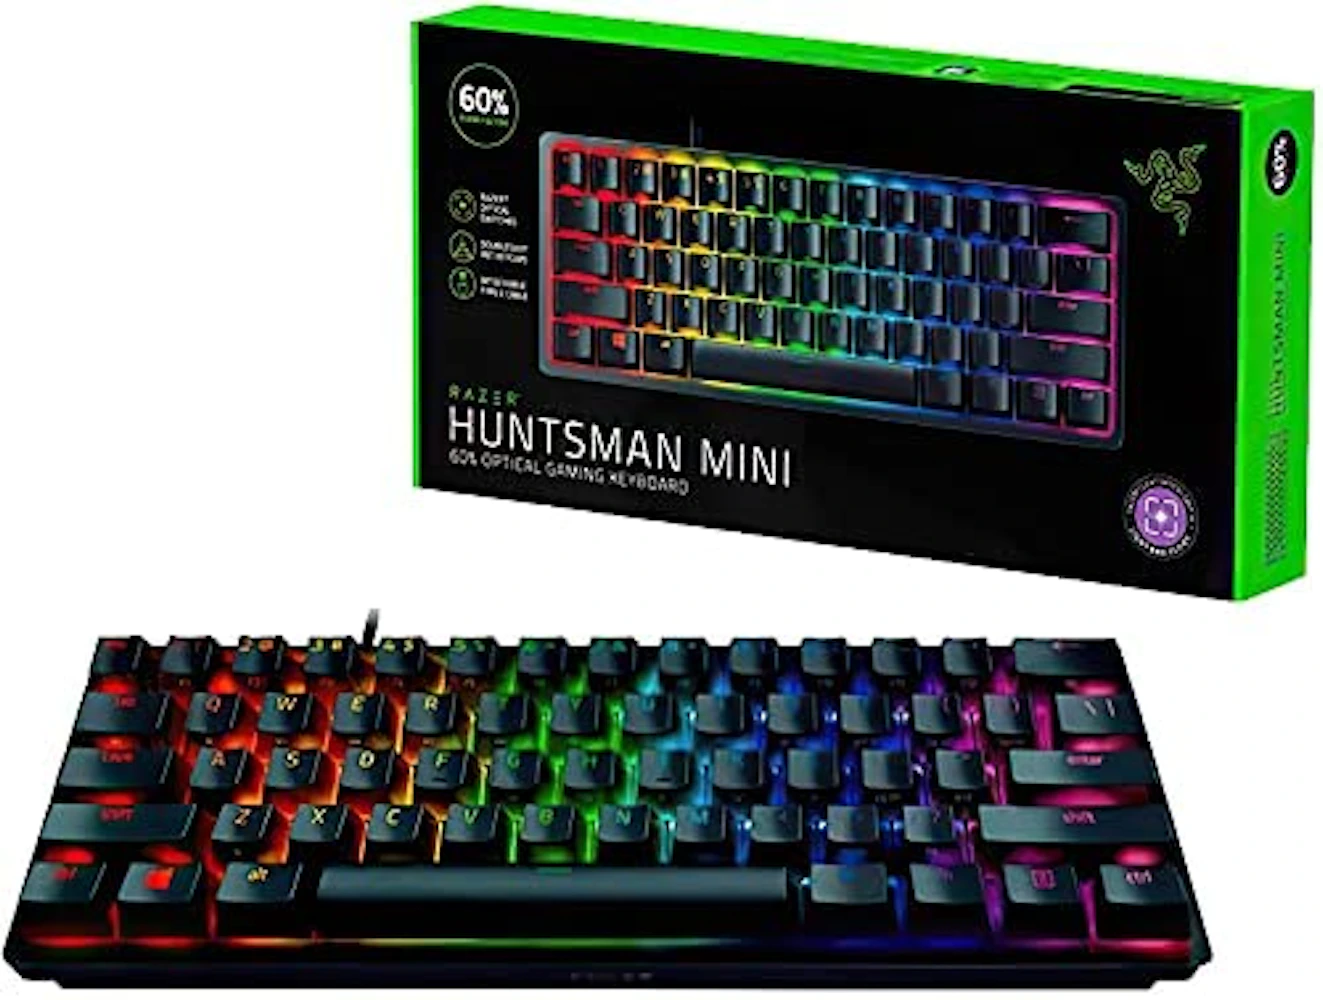 Razer Huntsman Mini 60% Wired Optical Clicky Switch Gaming